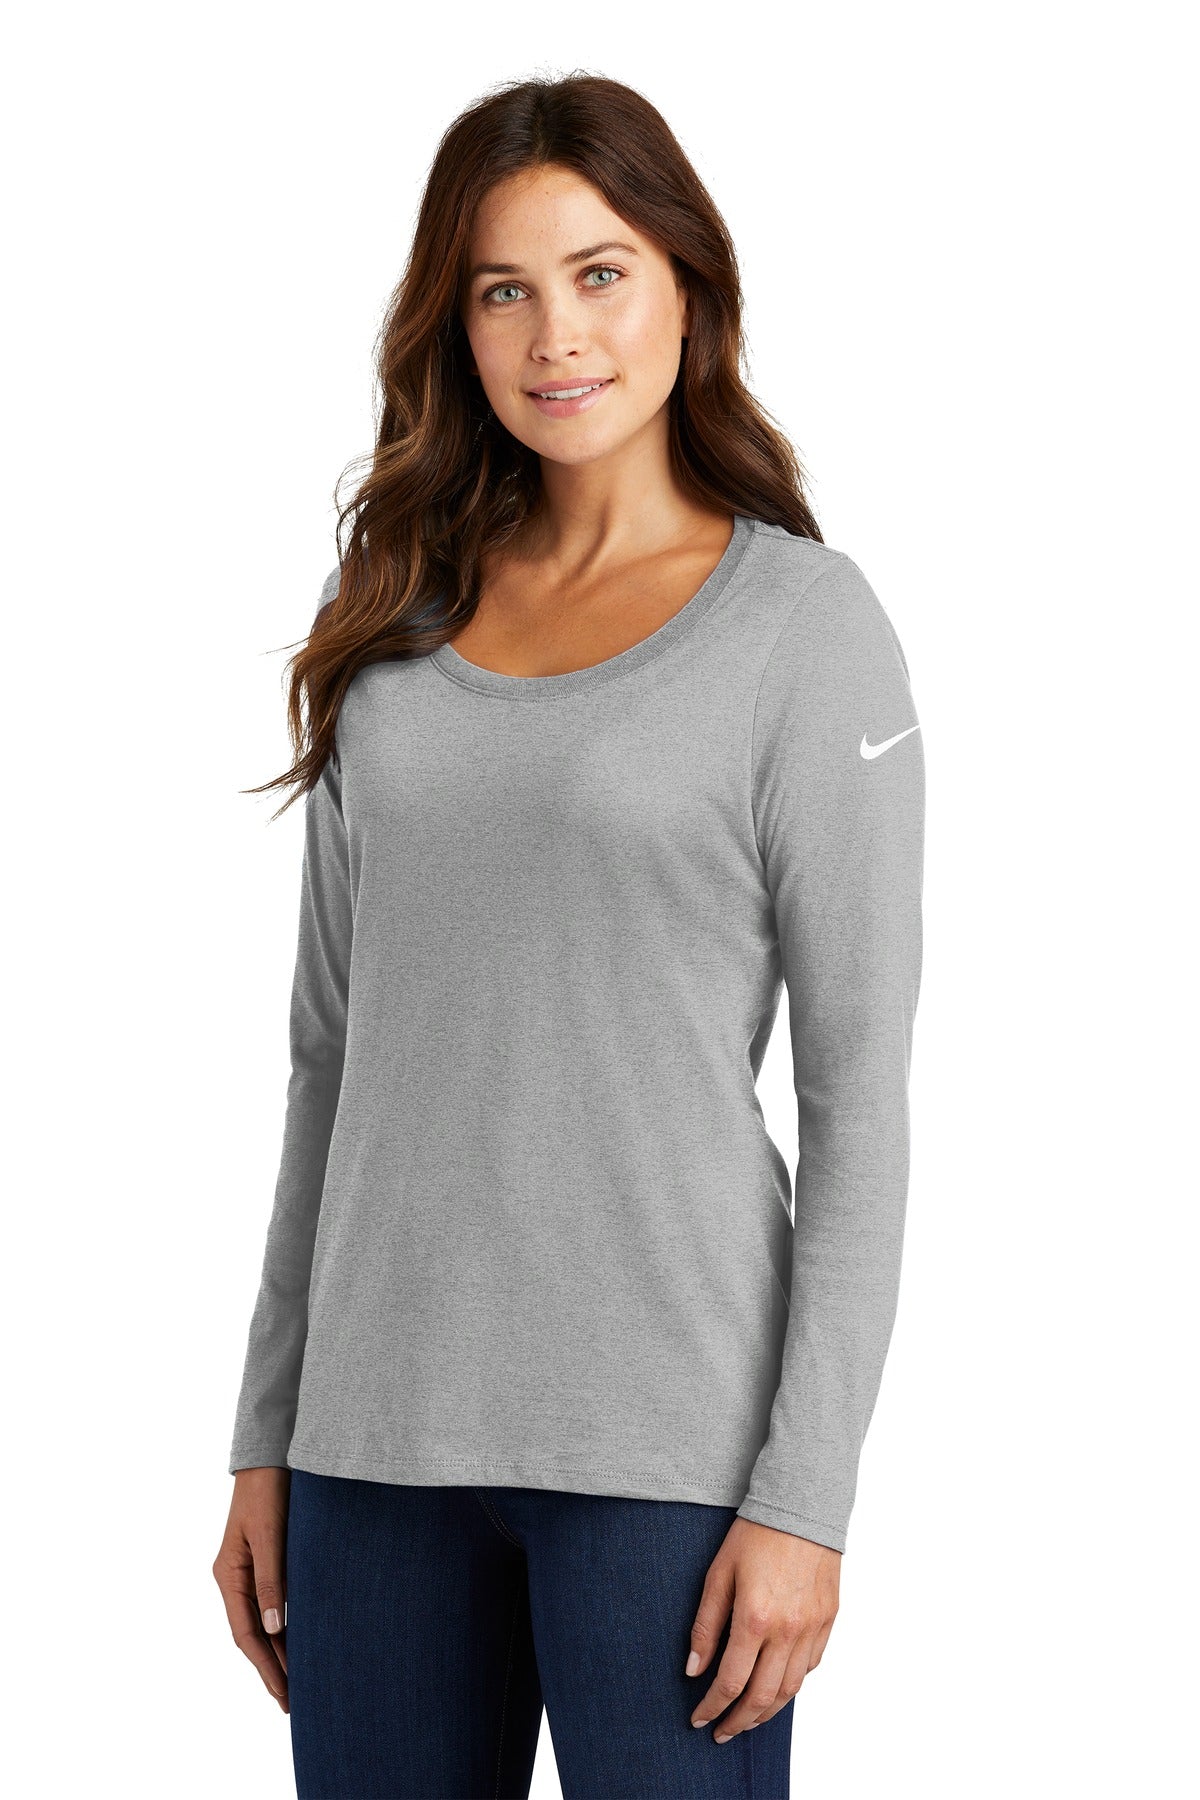 Nike Ladies Core Cotton Long Sleeve Scoop Neck Tee. NKBQ5235 - BT Imprintables Shirts